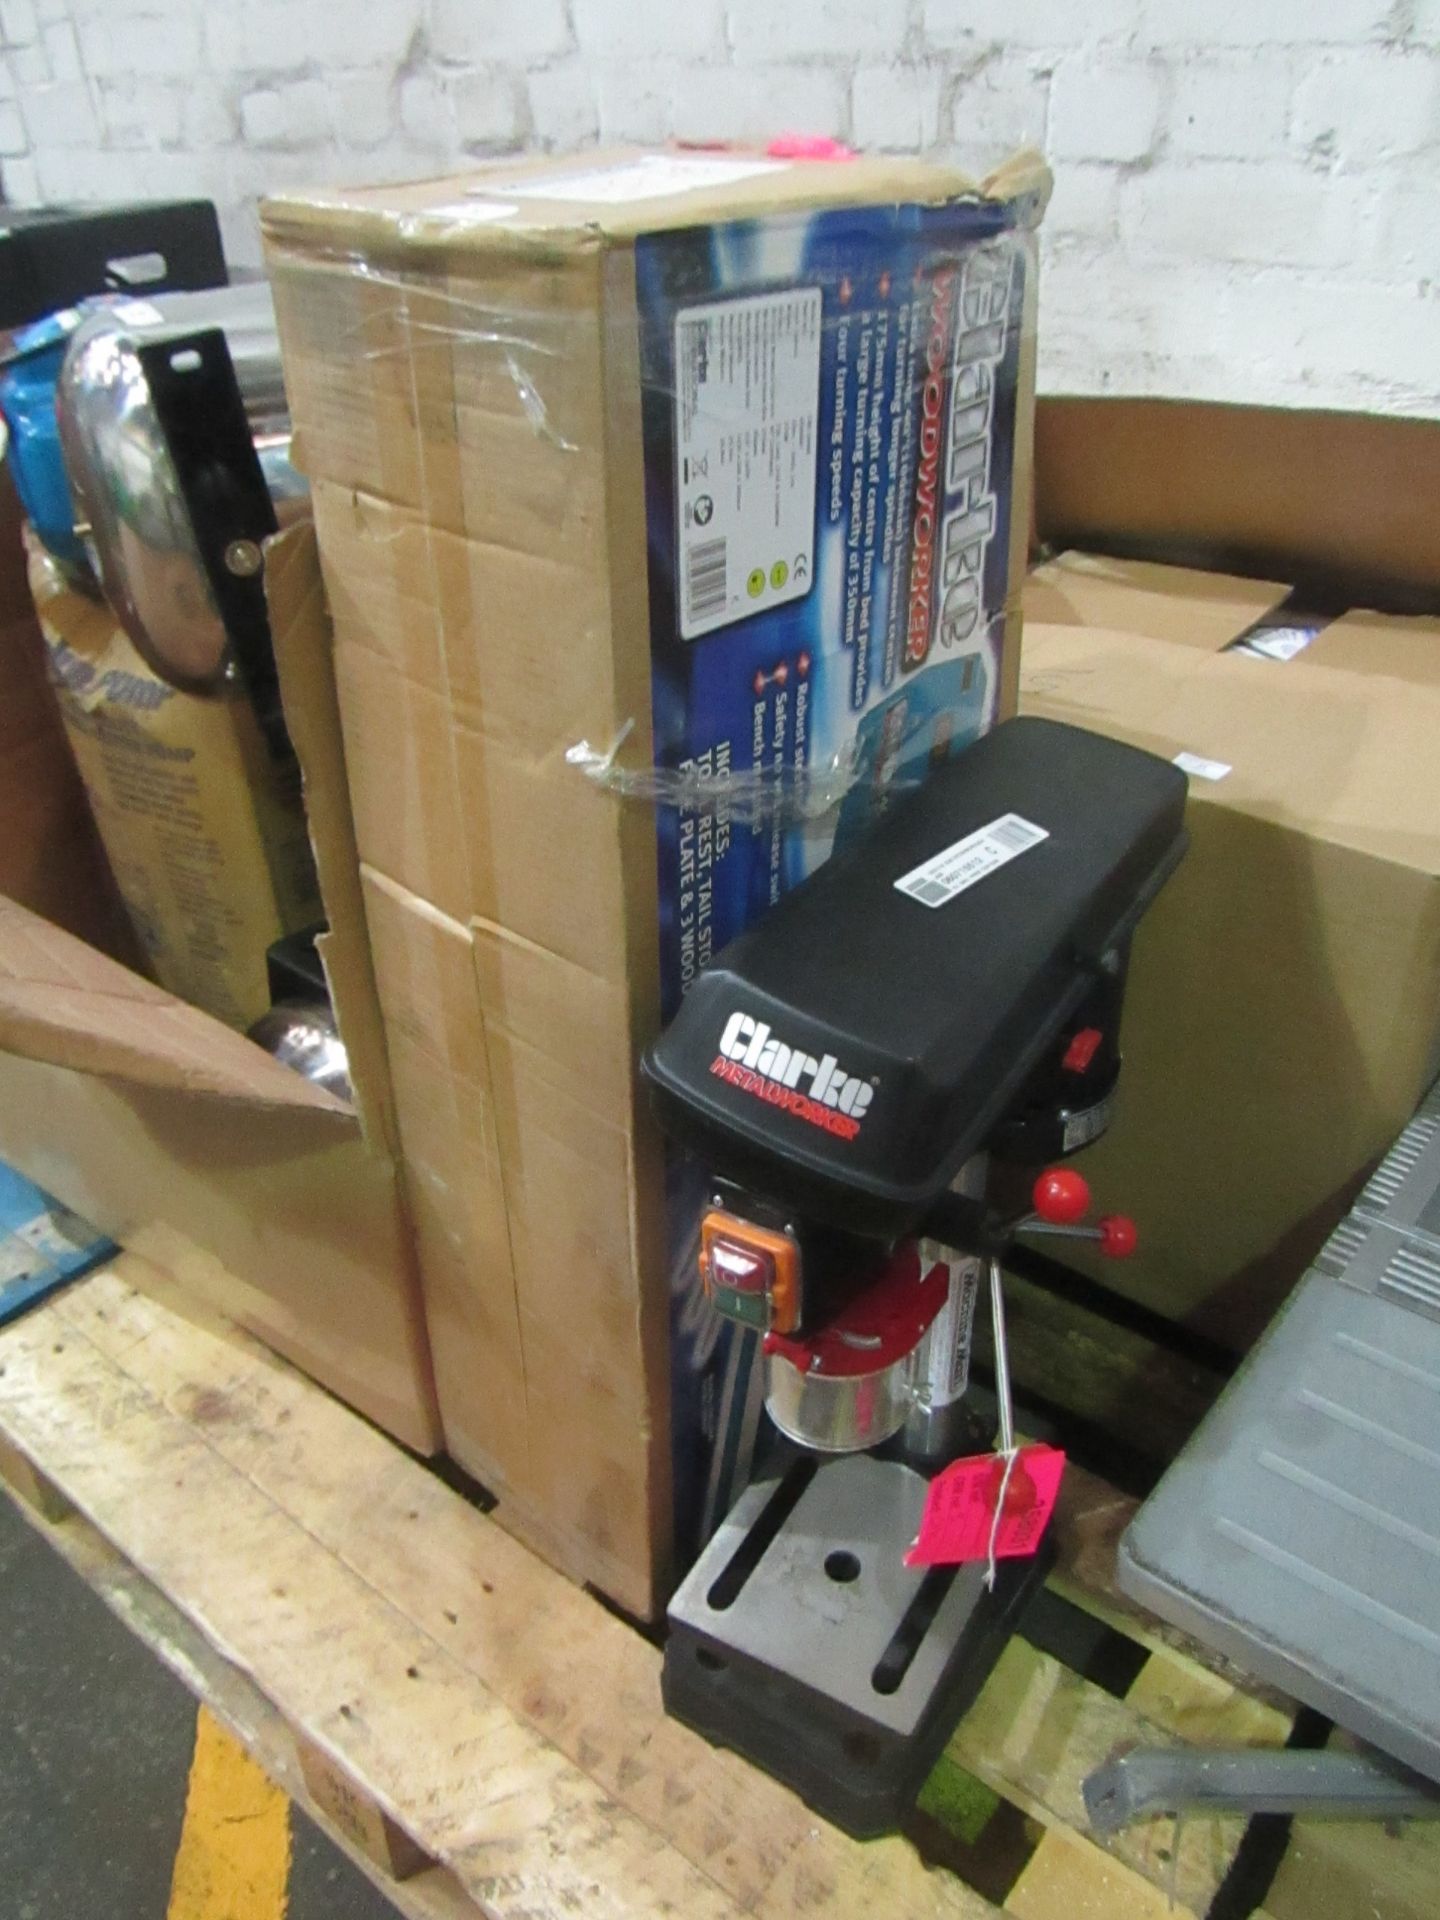 2x Items being; Clarke CDP102B Bench Mounted Drill Press (230V) - £95.98 Clarke CWL1000B 40" Wood